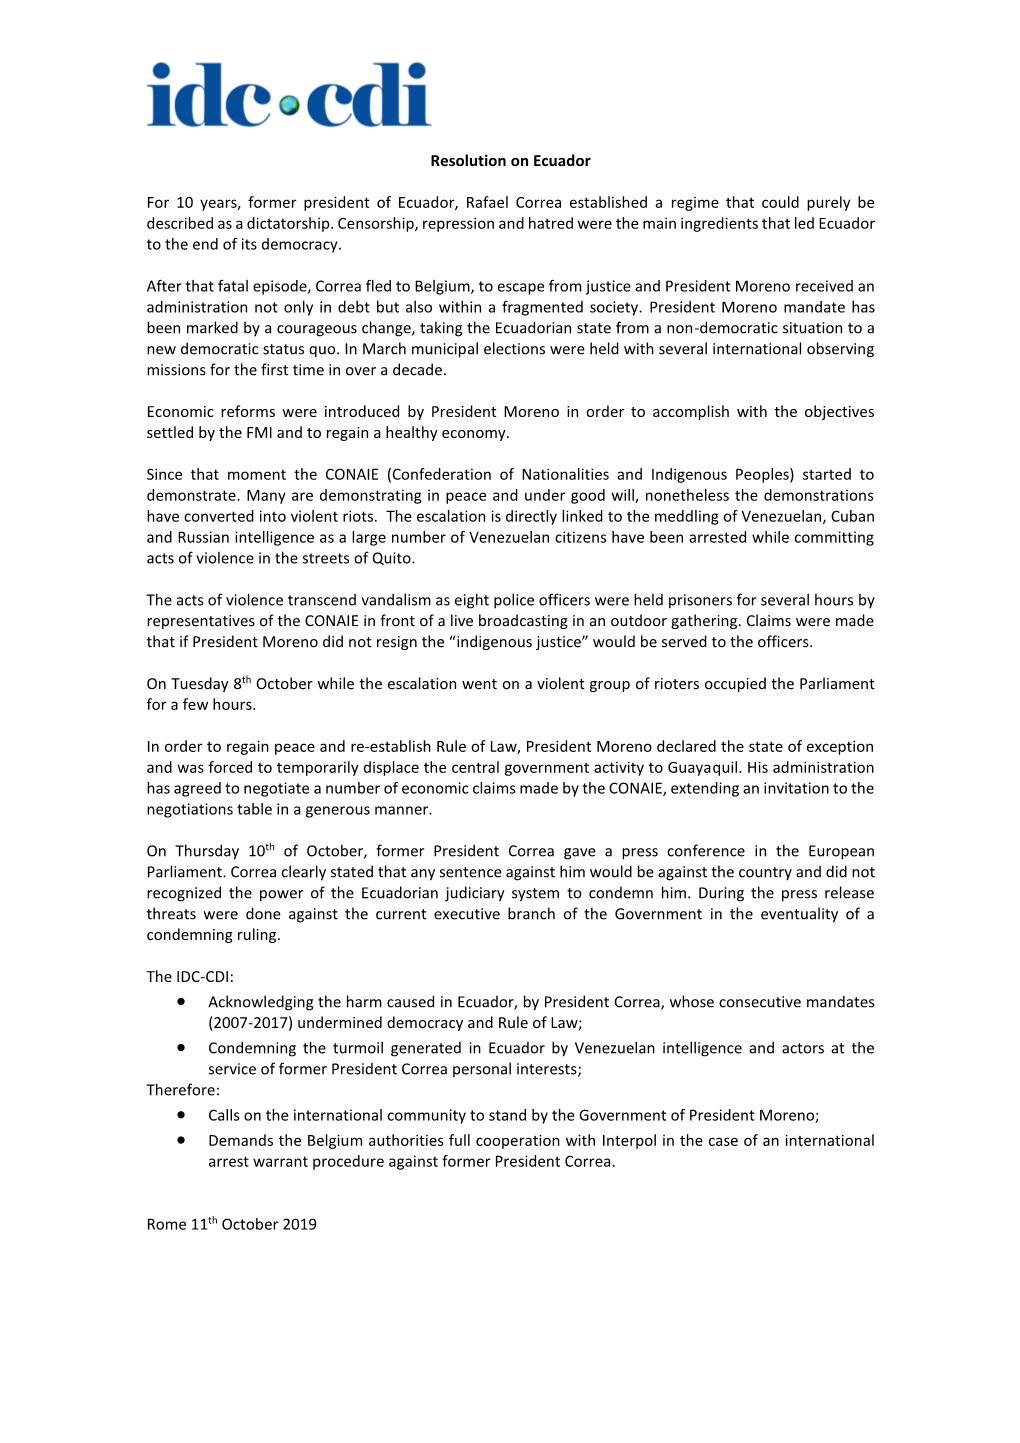 Resolution on Ecuador for 10 Years, Former President of Ecuador, Rafael